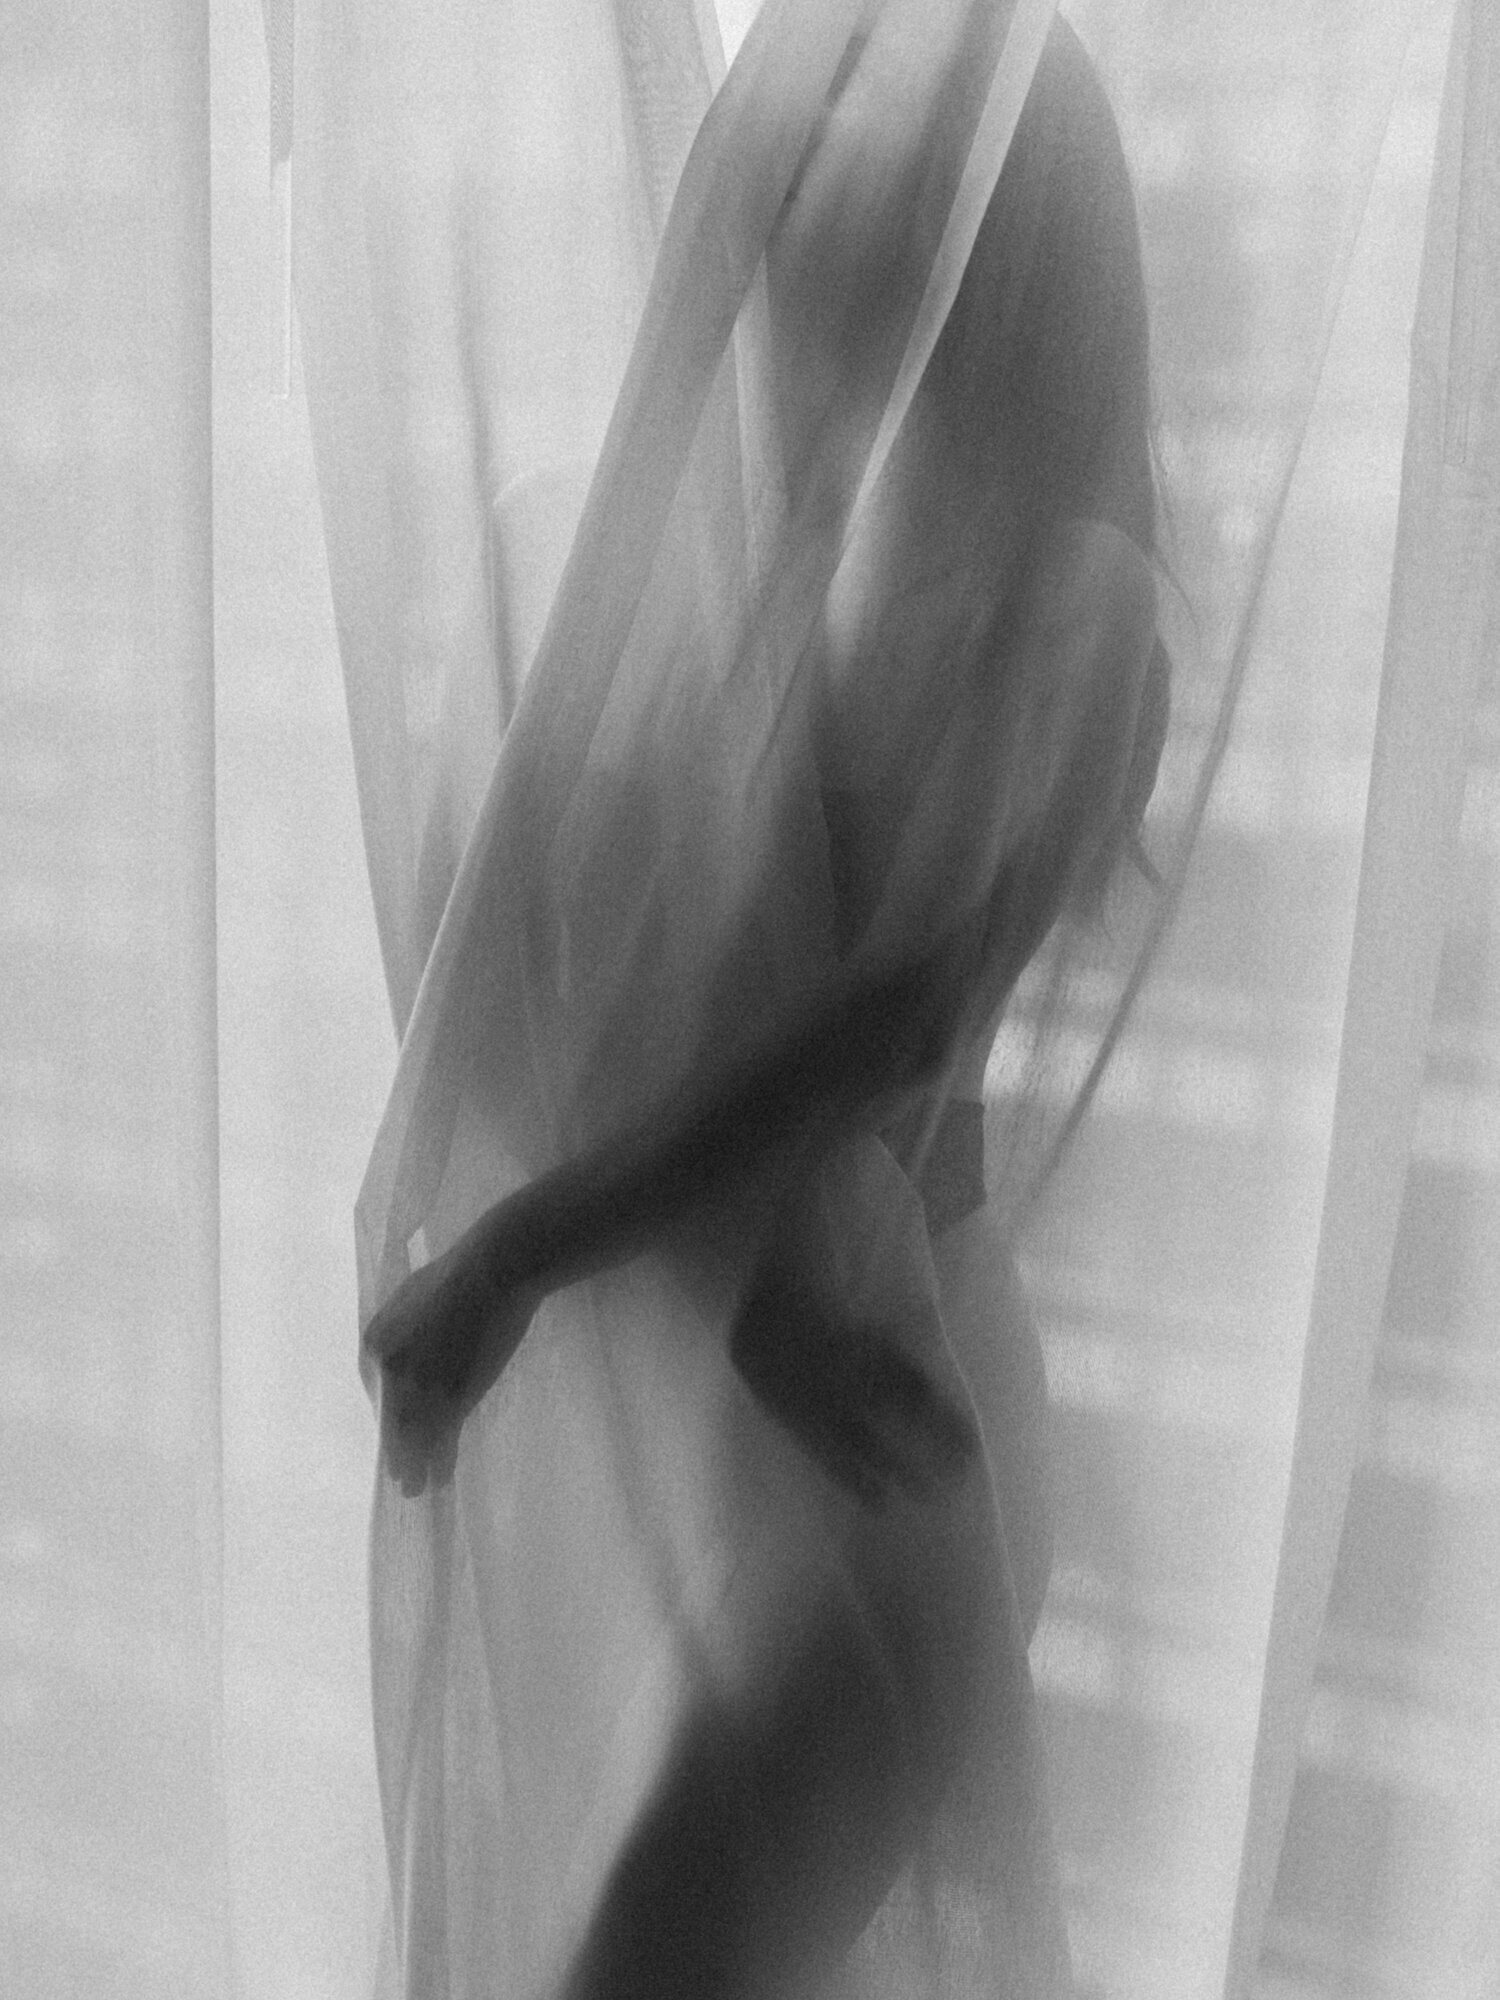 A creative and sensual boudoir photo by Chicago boudoir photographer Ashley Biess of Artistrie Co.